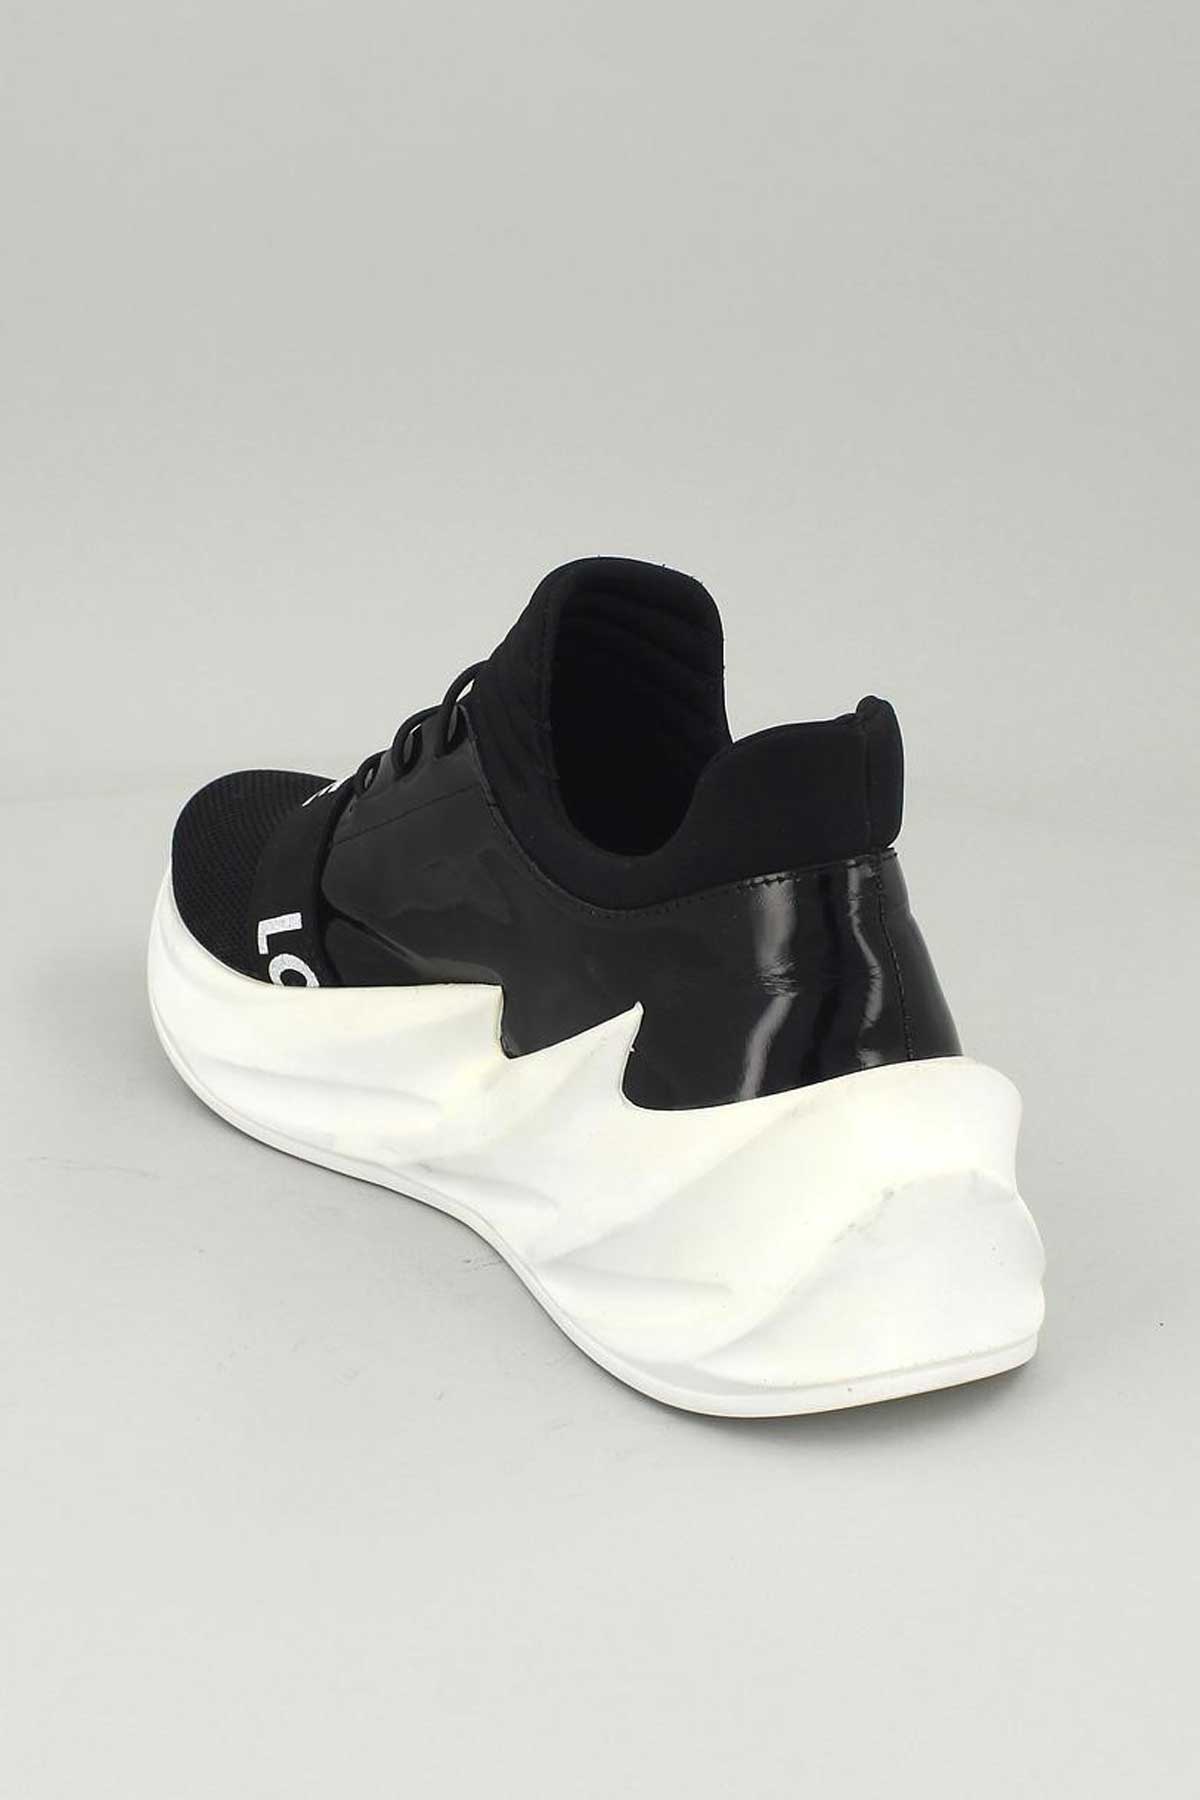 Kadın Deri Sneakers Siyah 13791Y